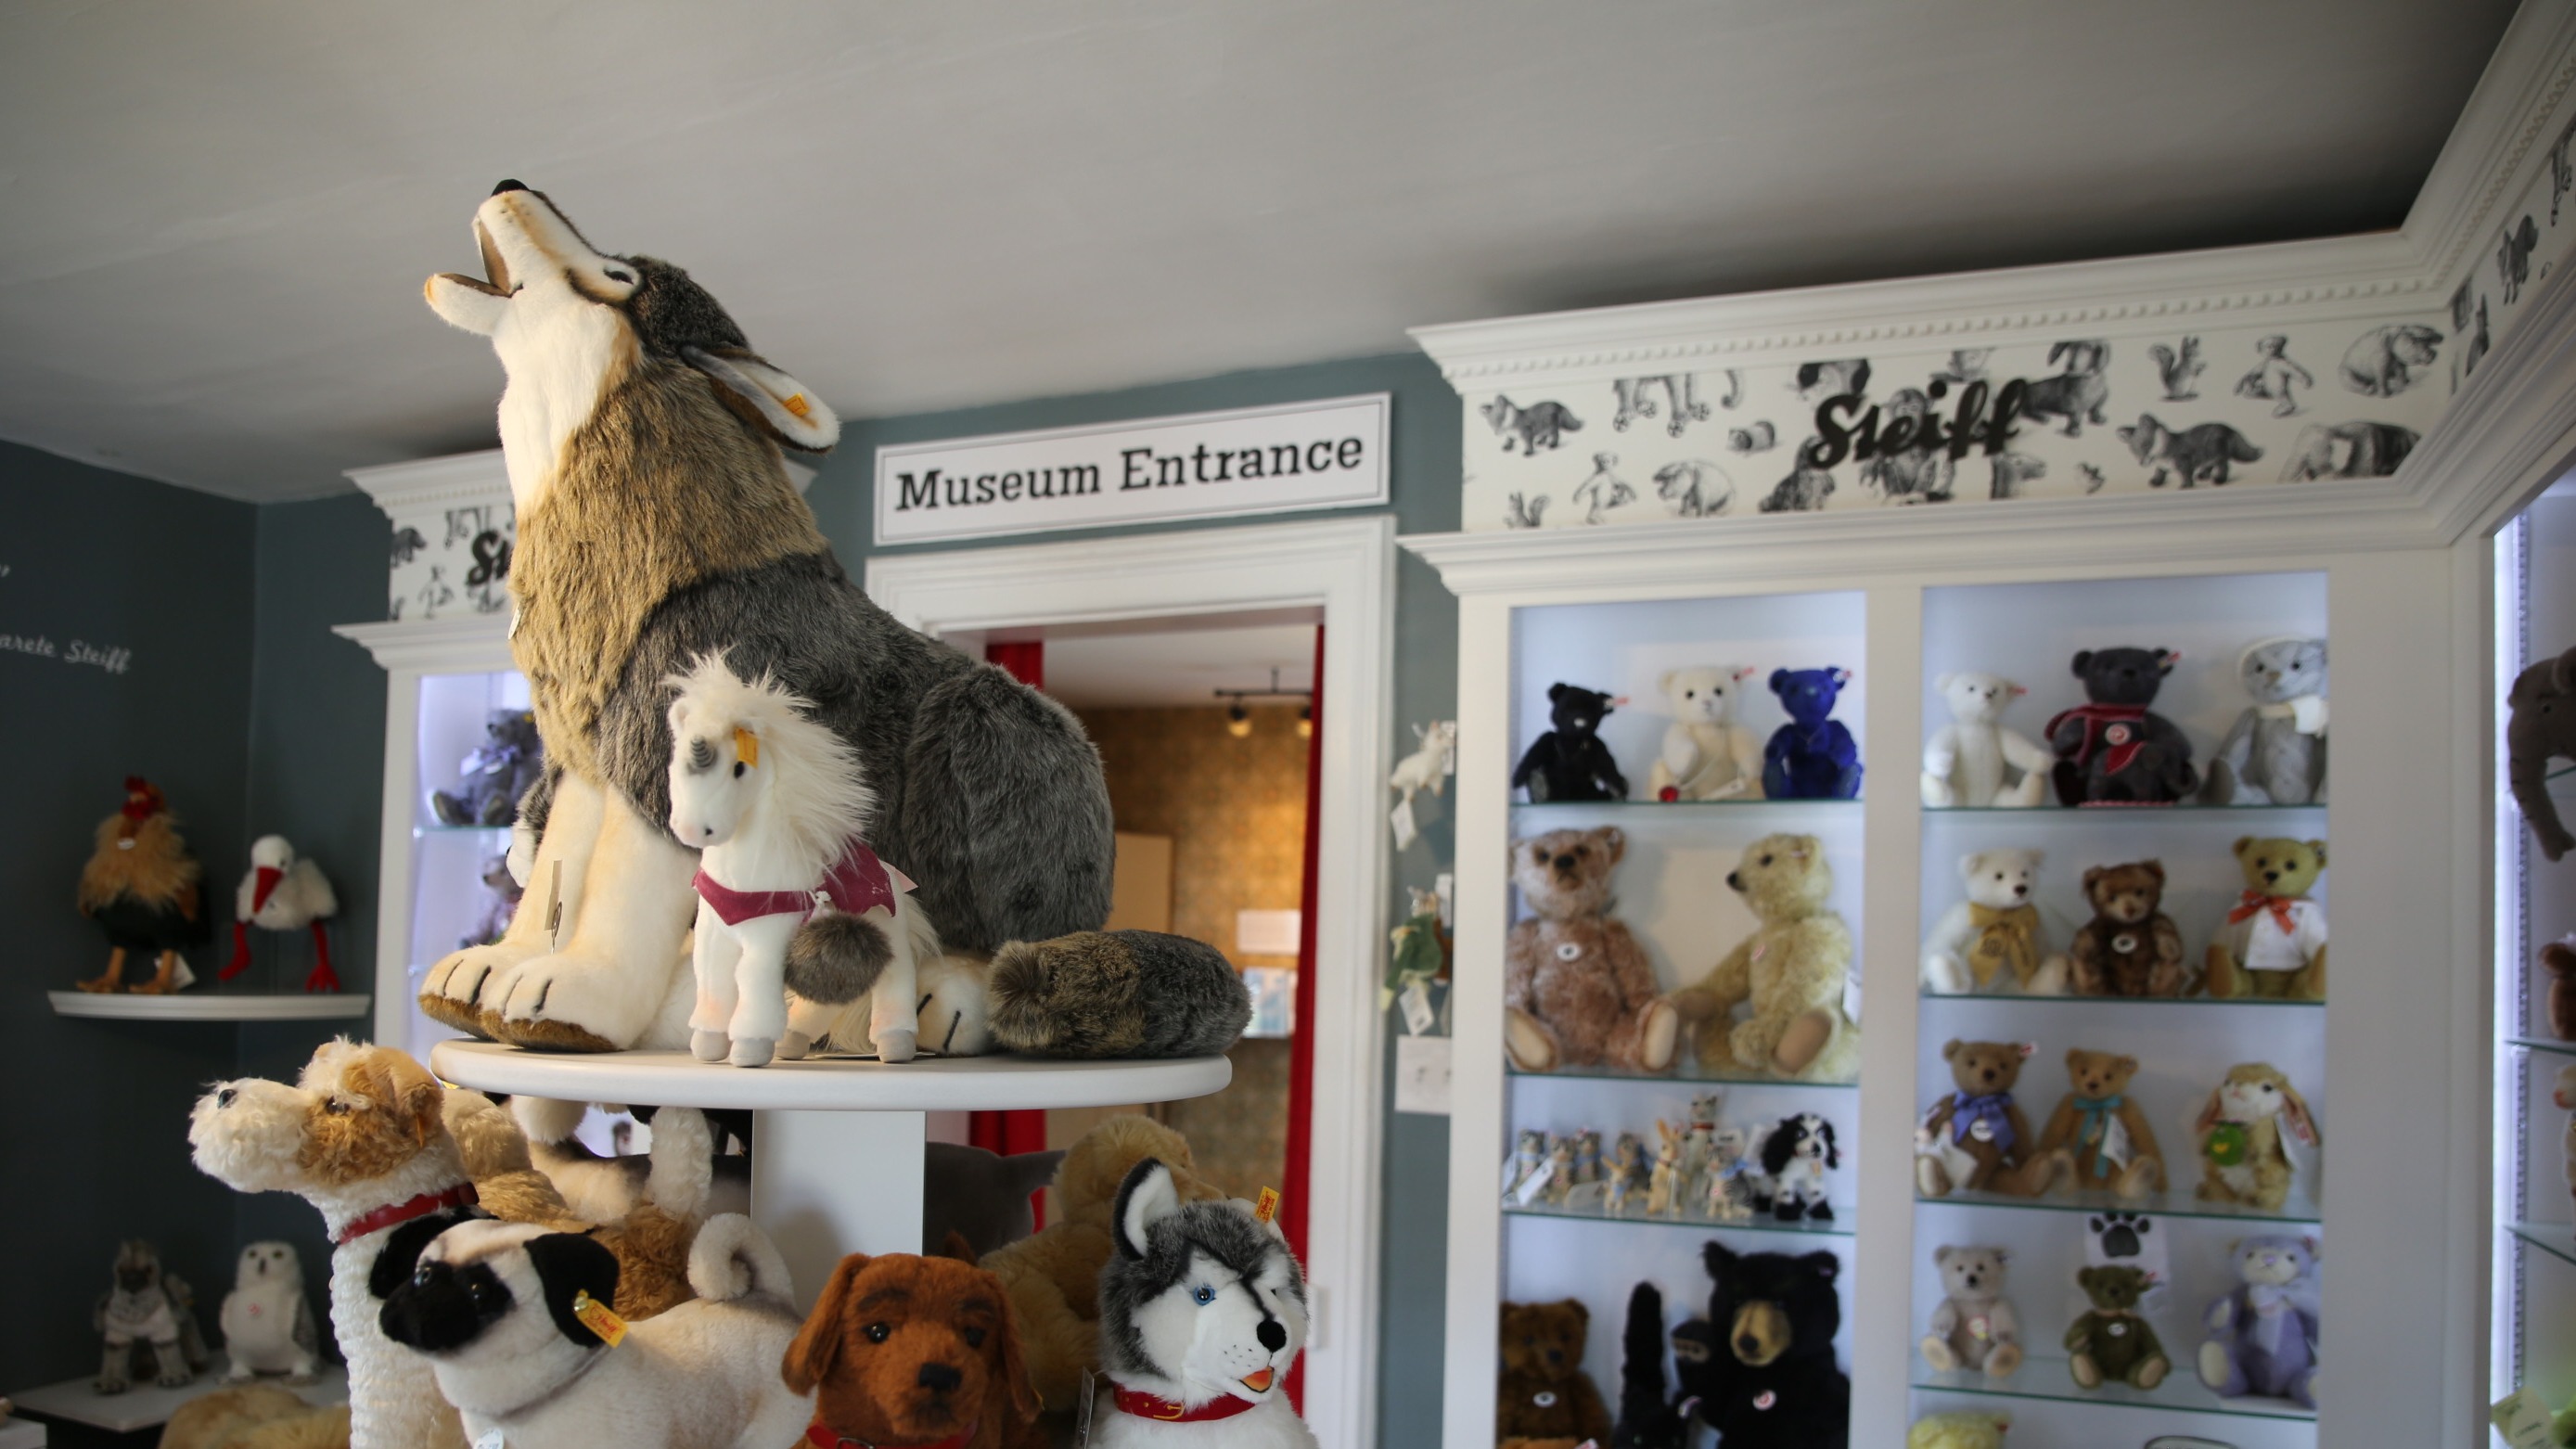 Marbletown bed & breakfast doubles as Teddy bear museum – Daily Freeman